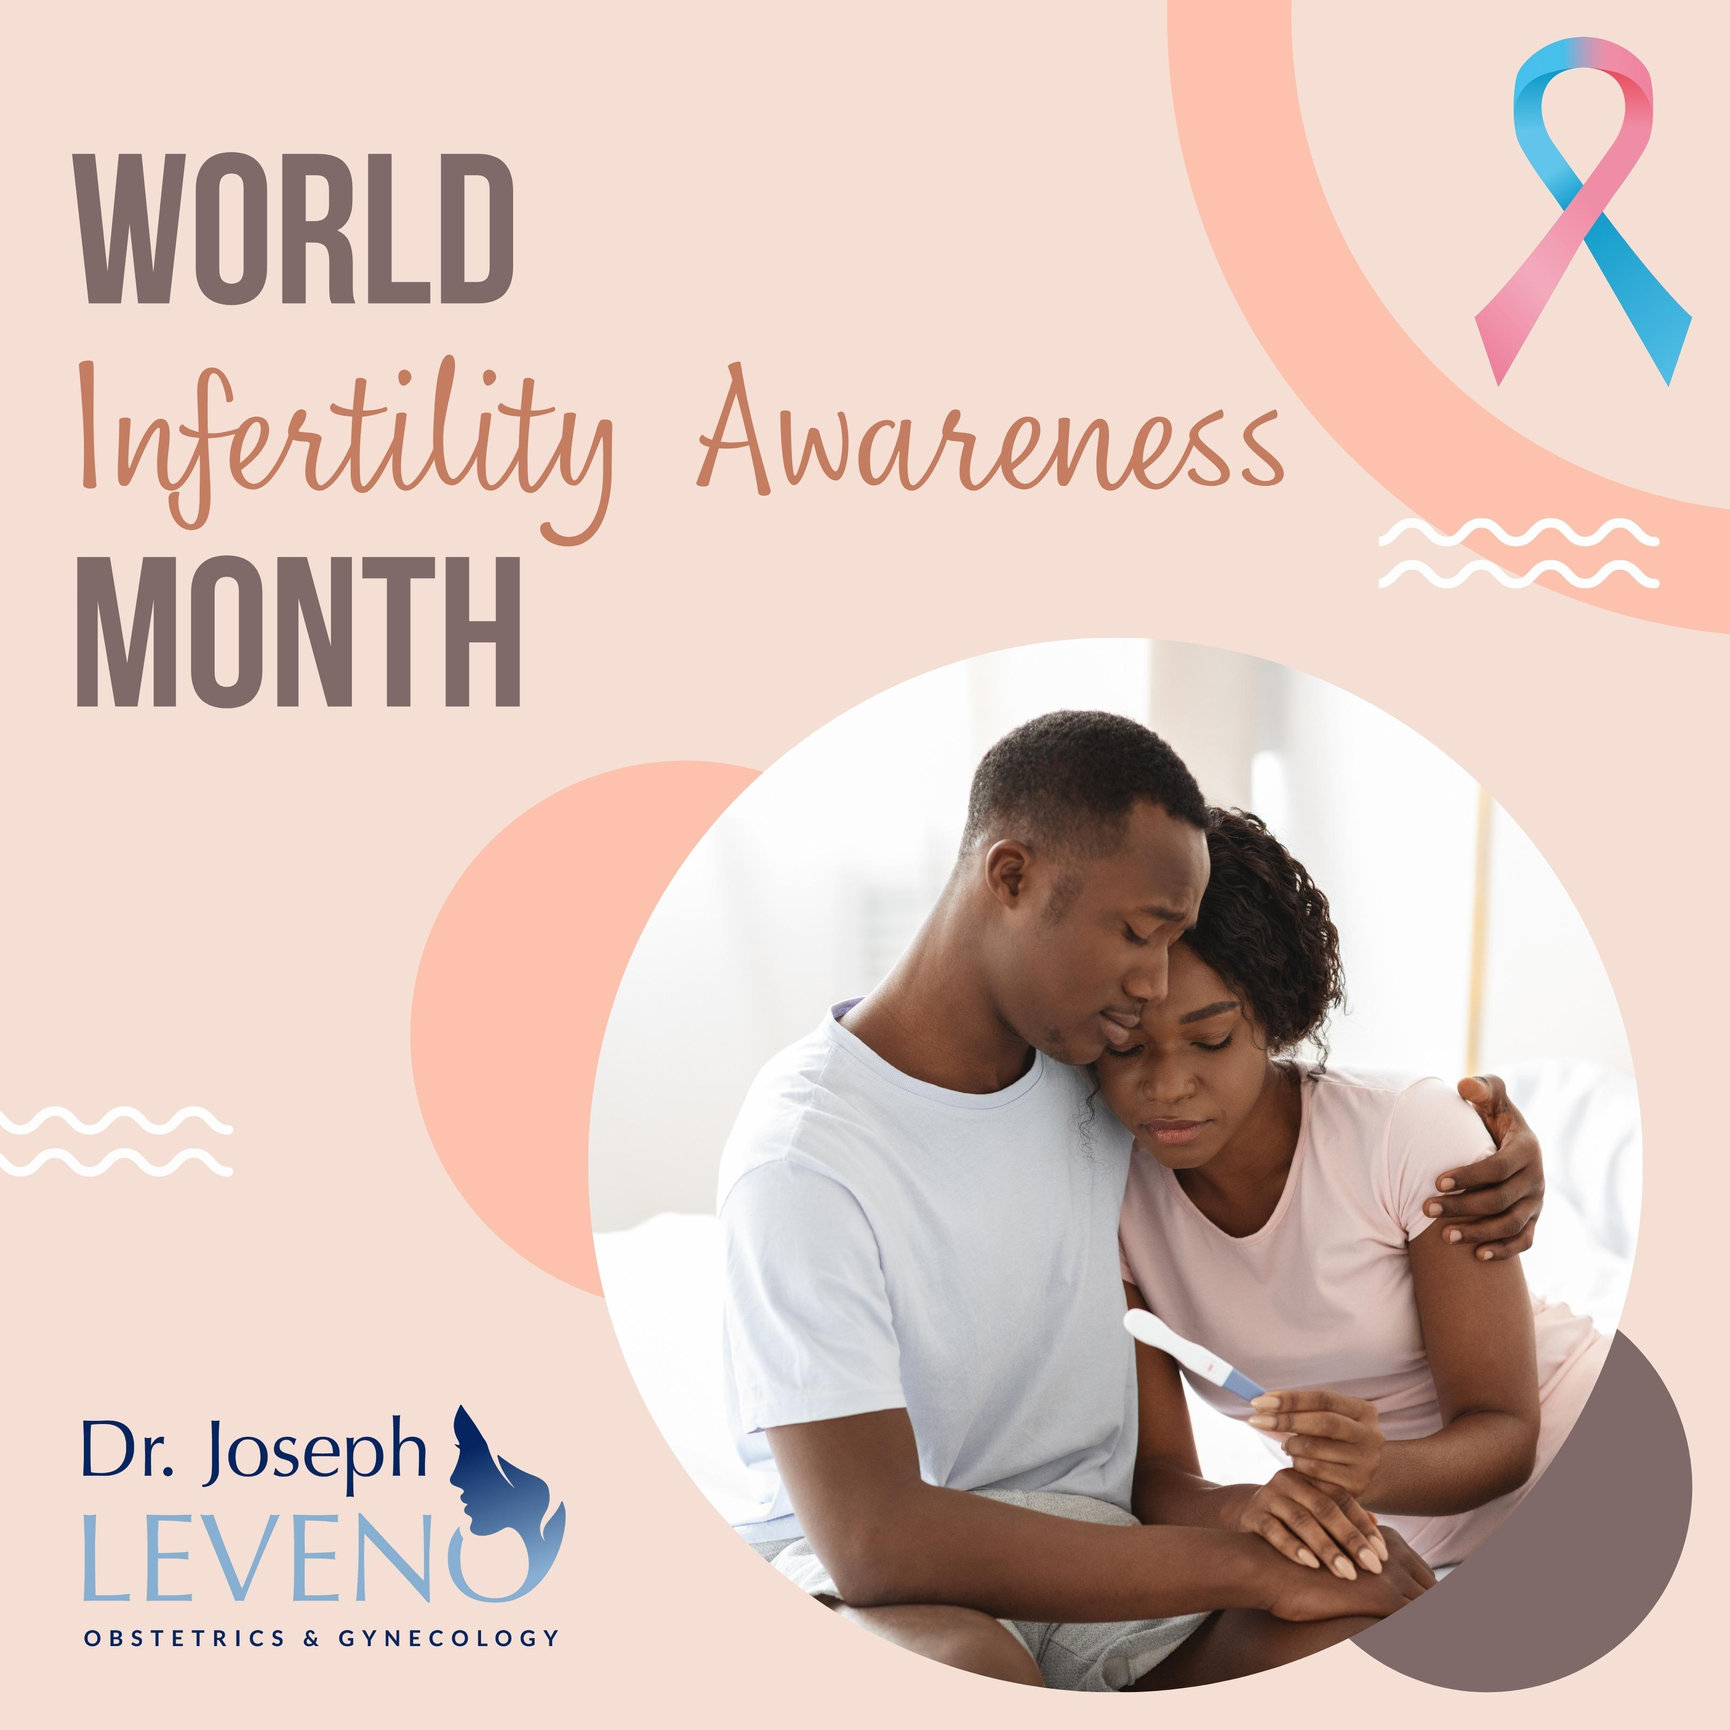 World Infertility Awareness Month Dr. Joseph Leveno